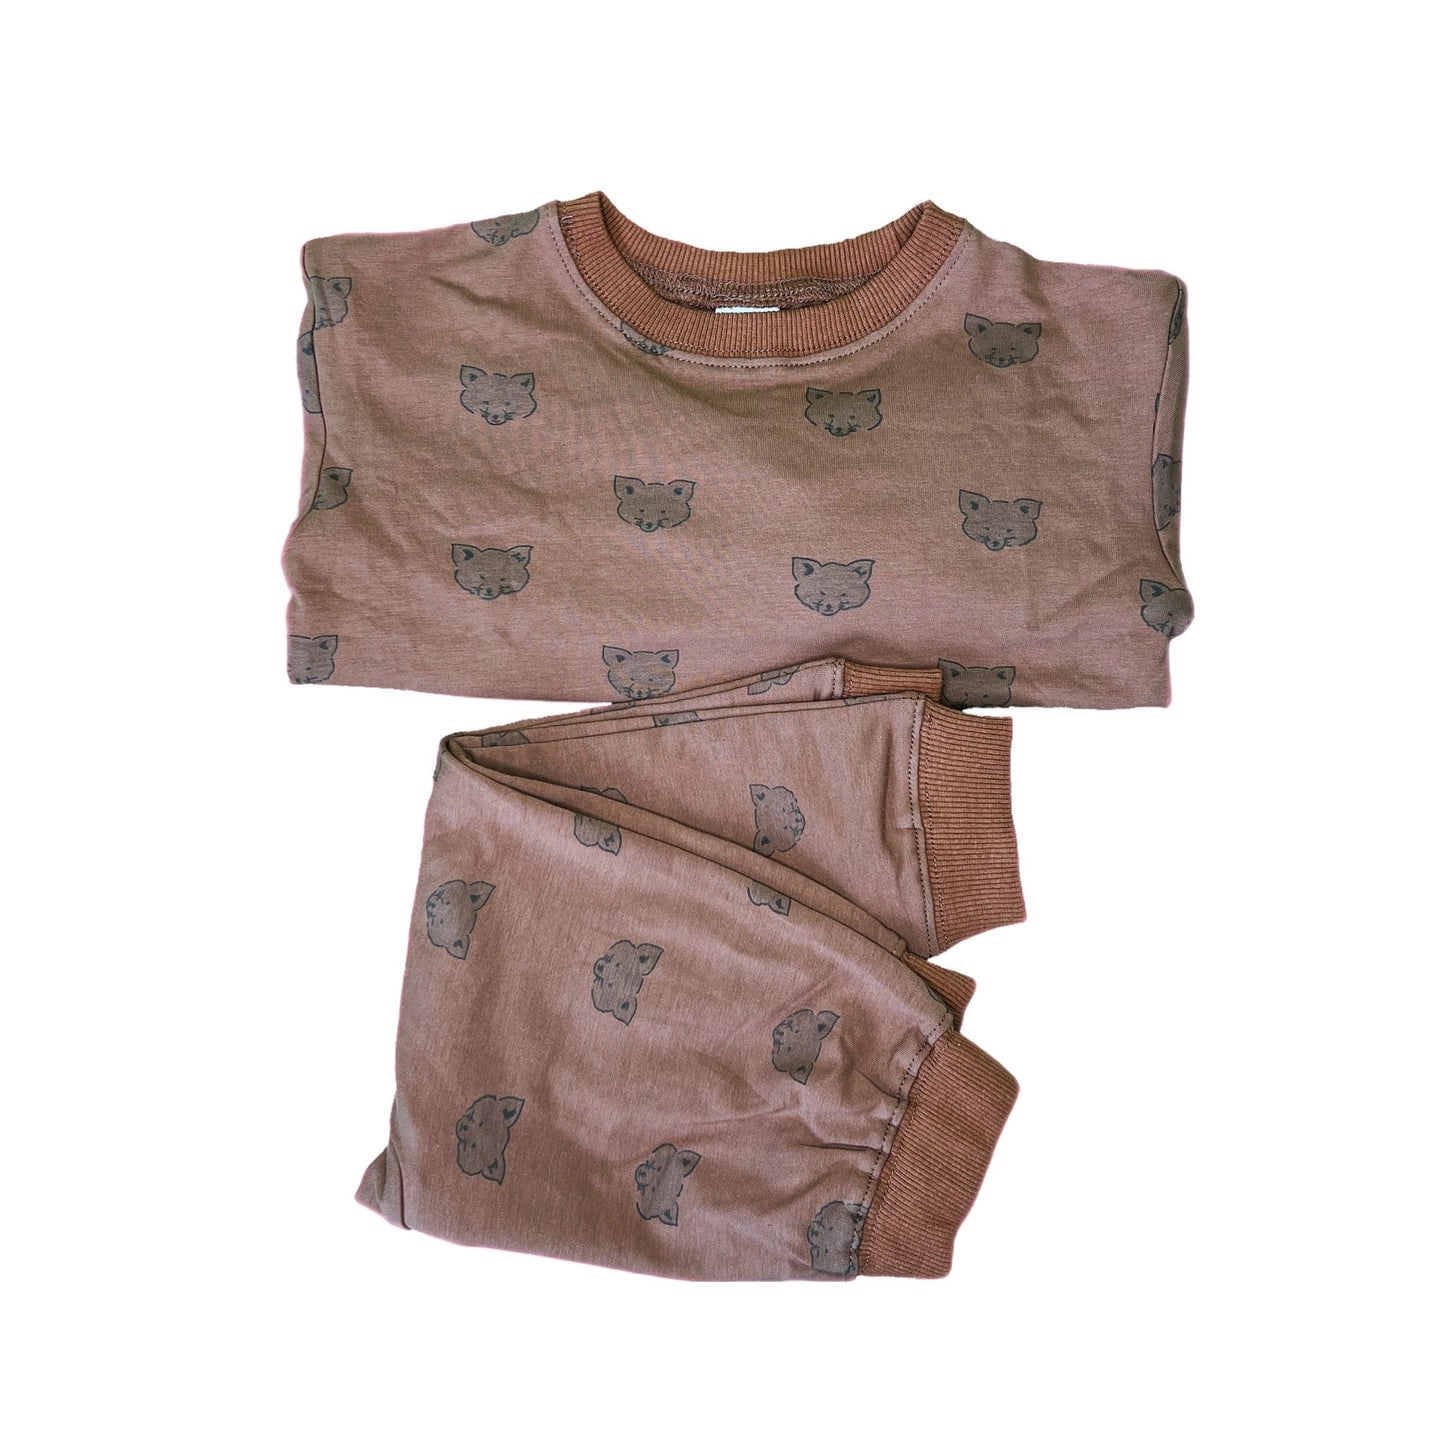 2 pc Set: Baby 0-5T Matching Brown Animal Print Sweater Top and Bottom Set